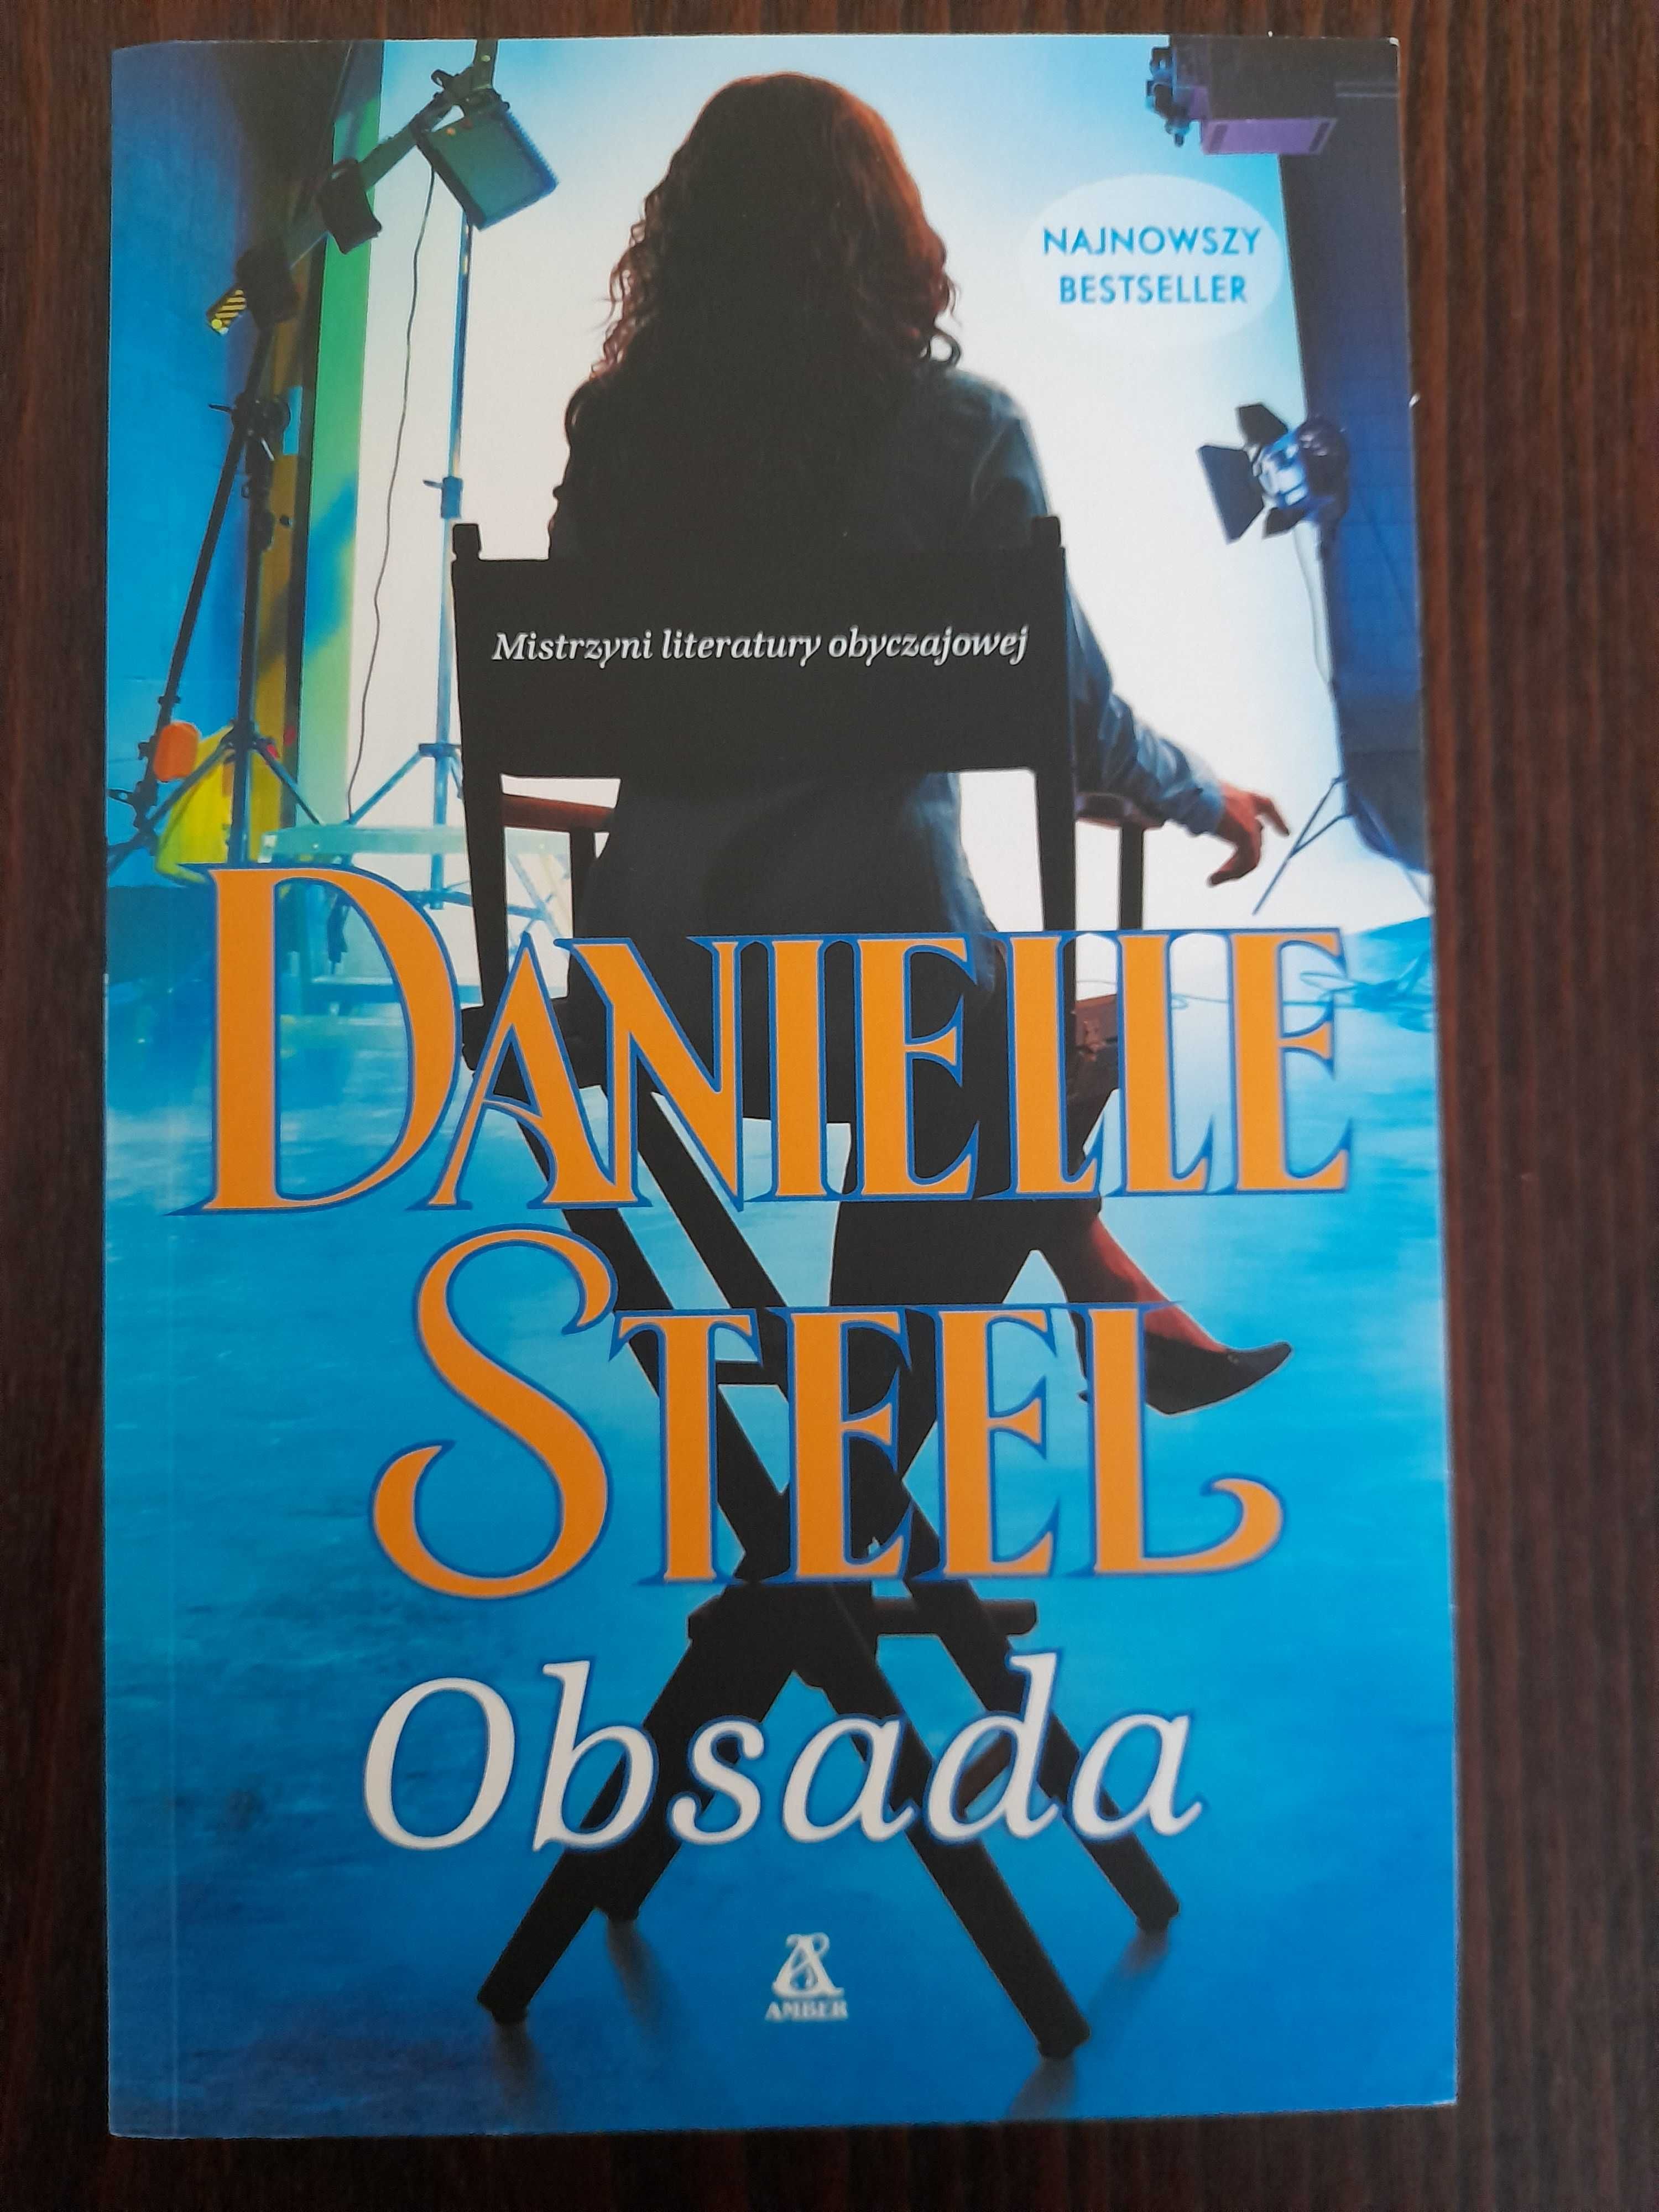 Danielle Steel - Obsada